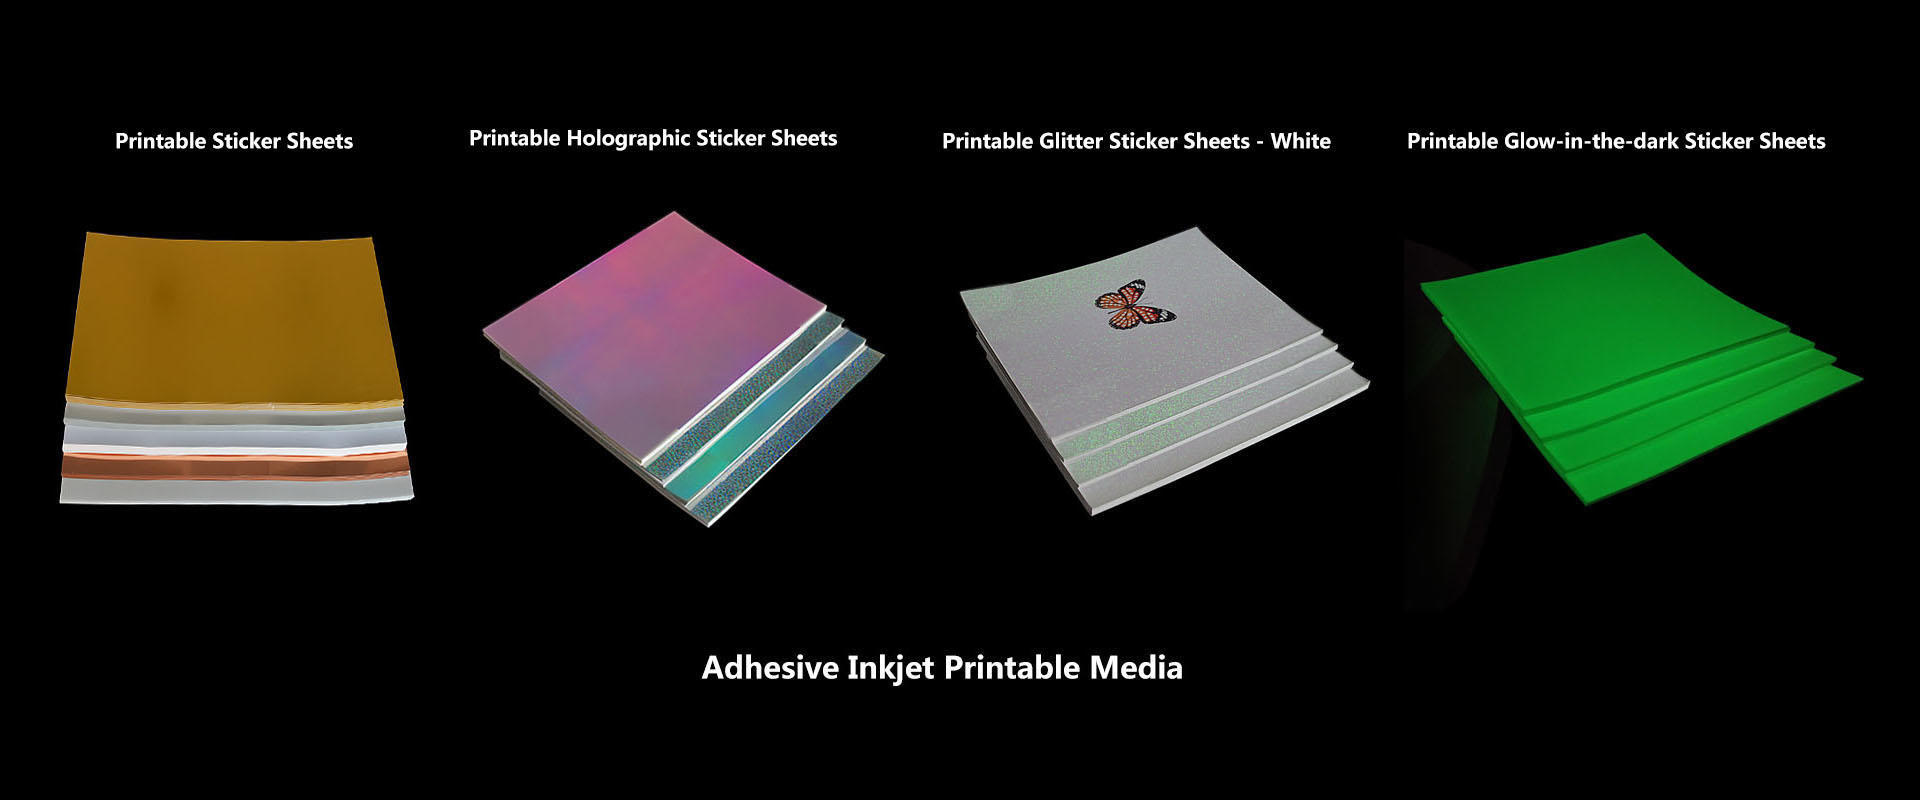 Printable Sticker Sheets